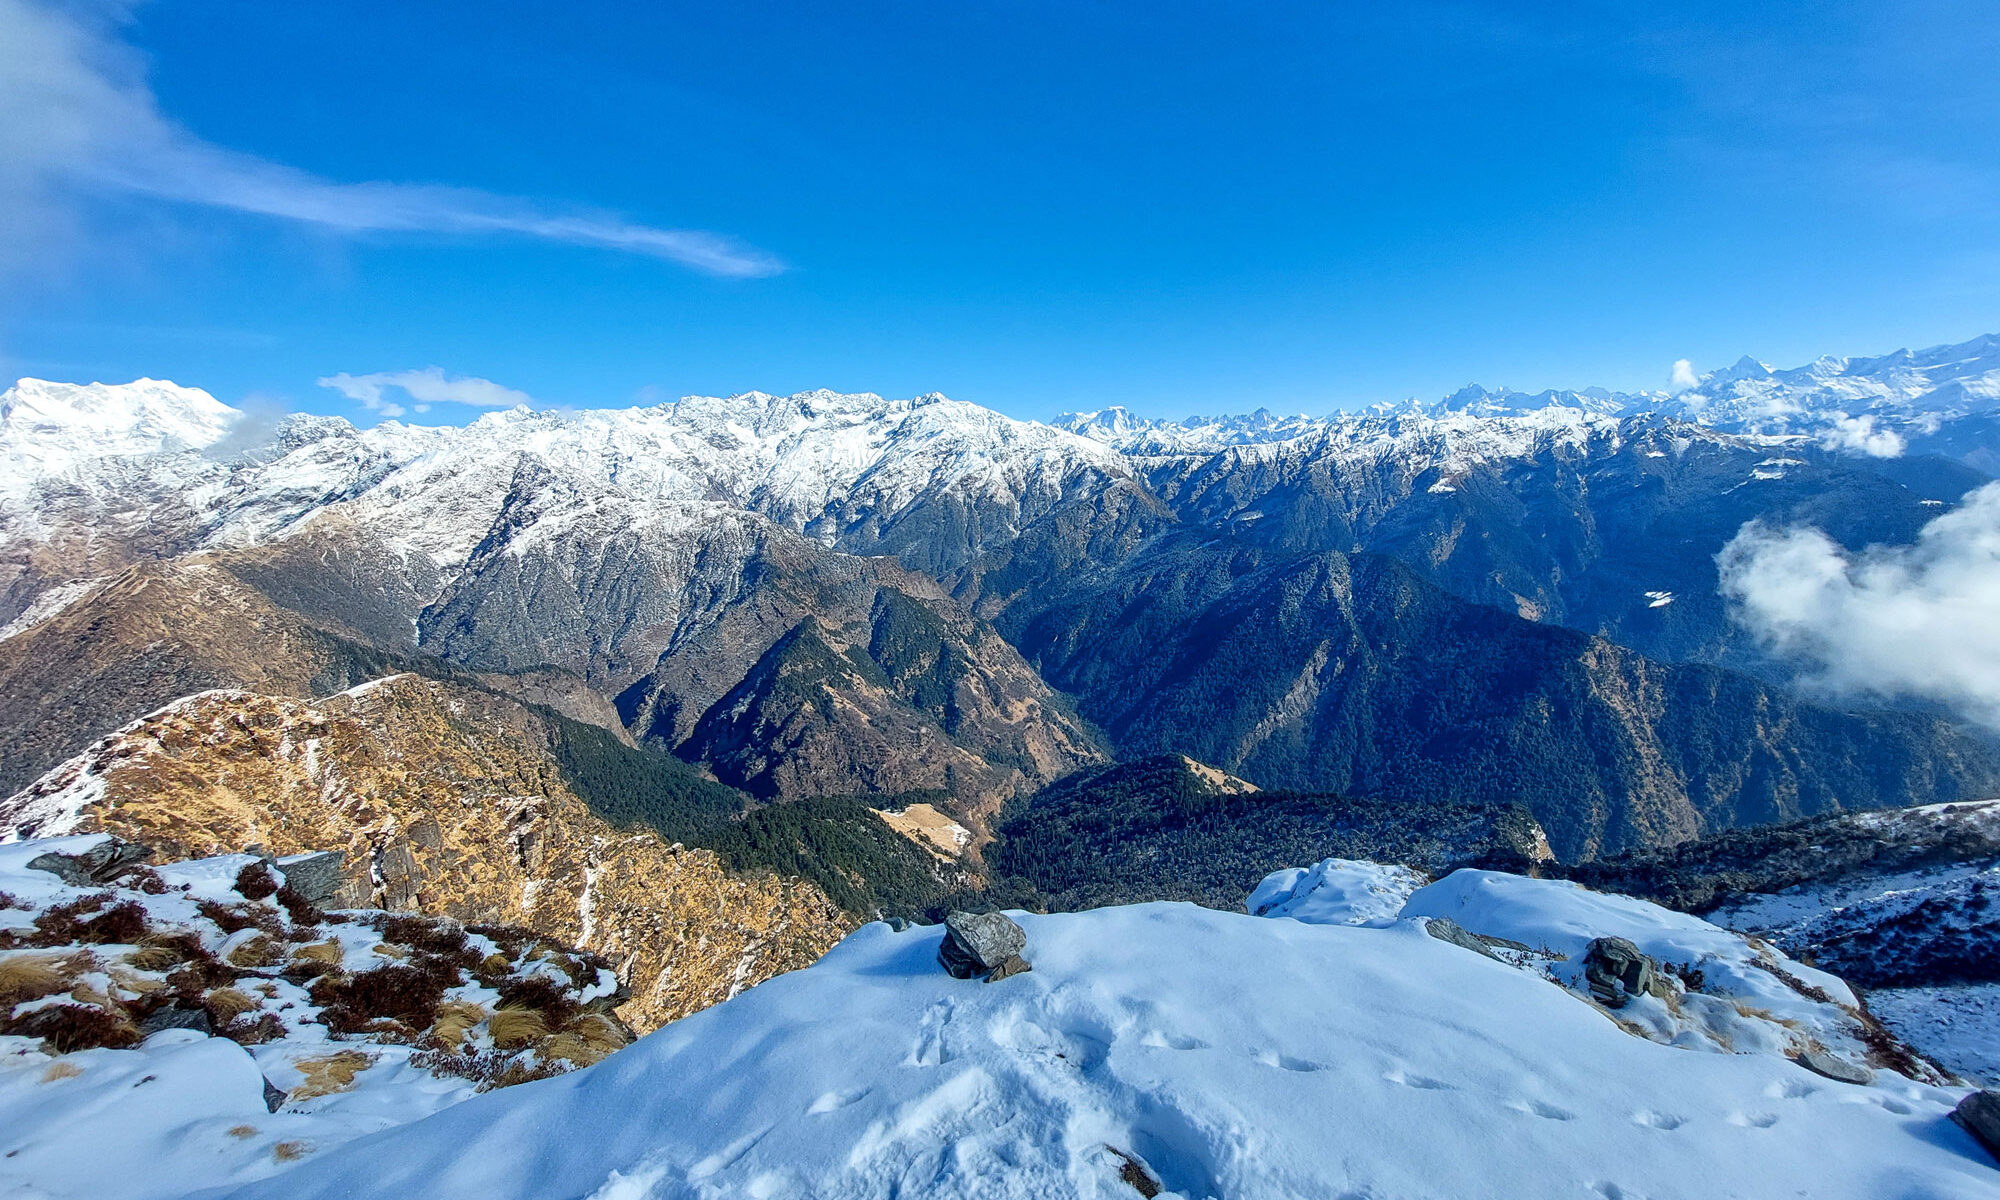 Garhwal Himalayas, Chopta is a quaint hamlet